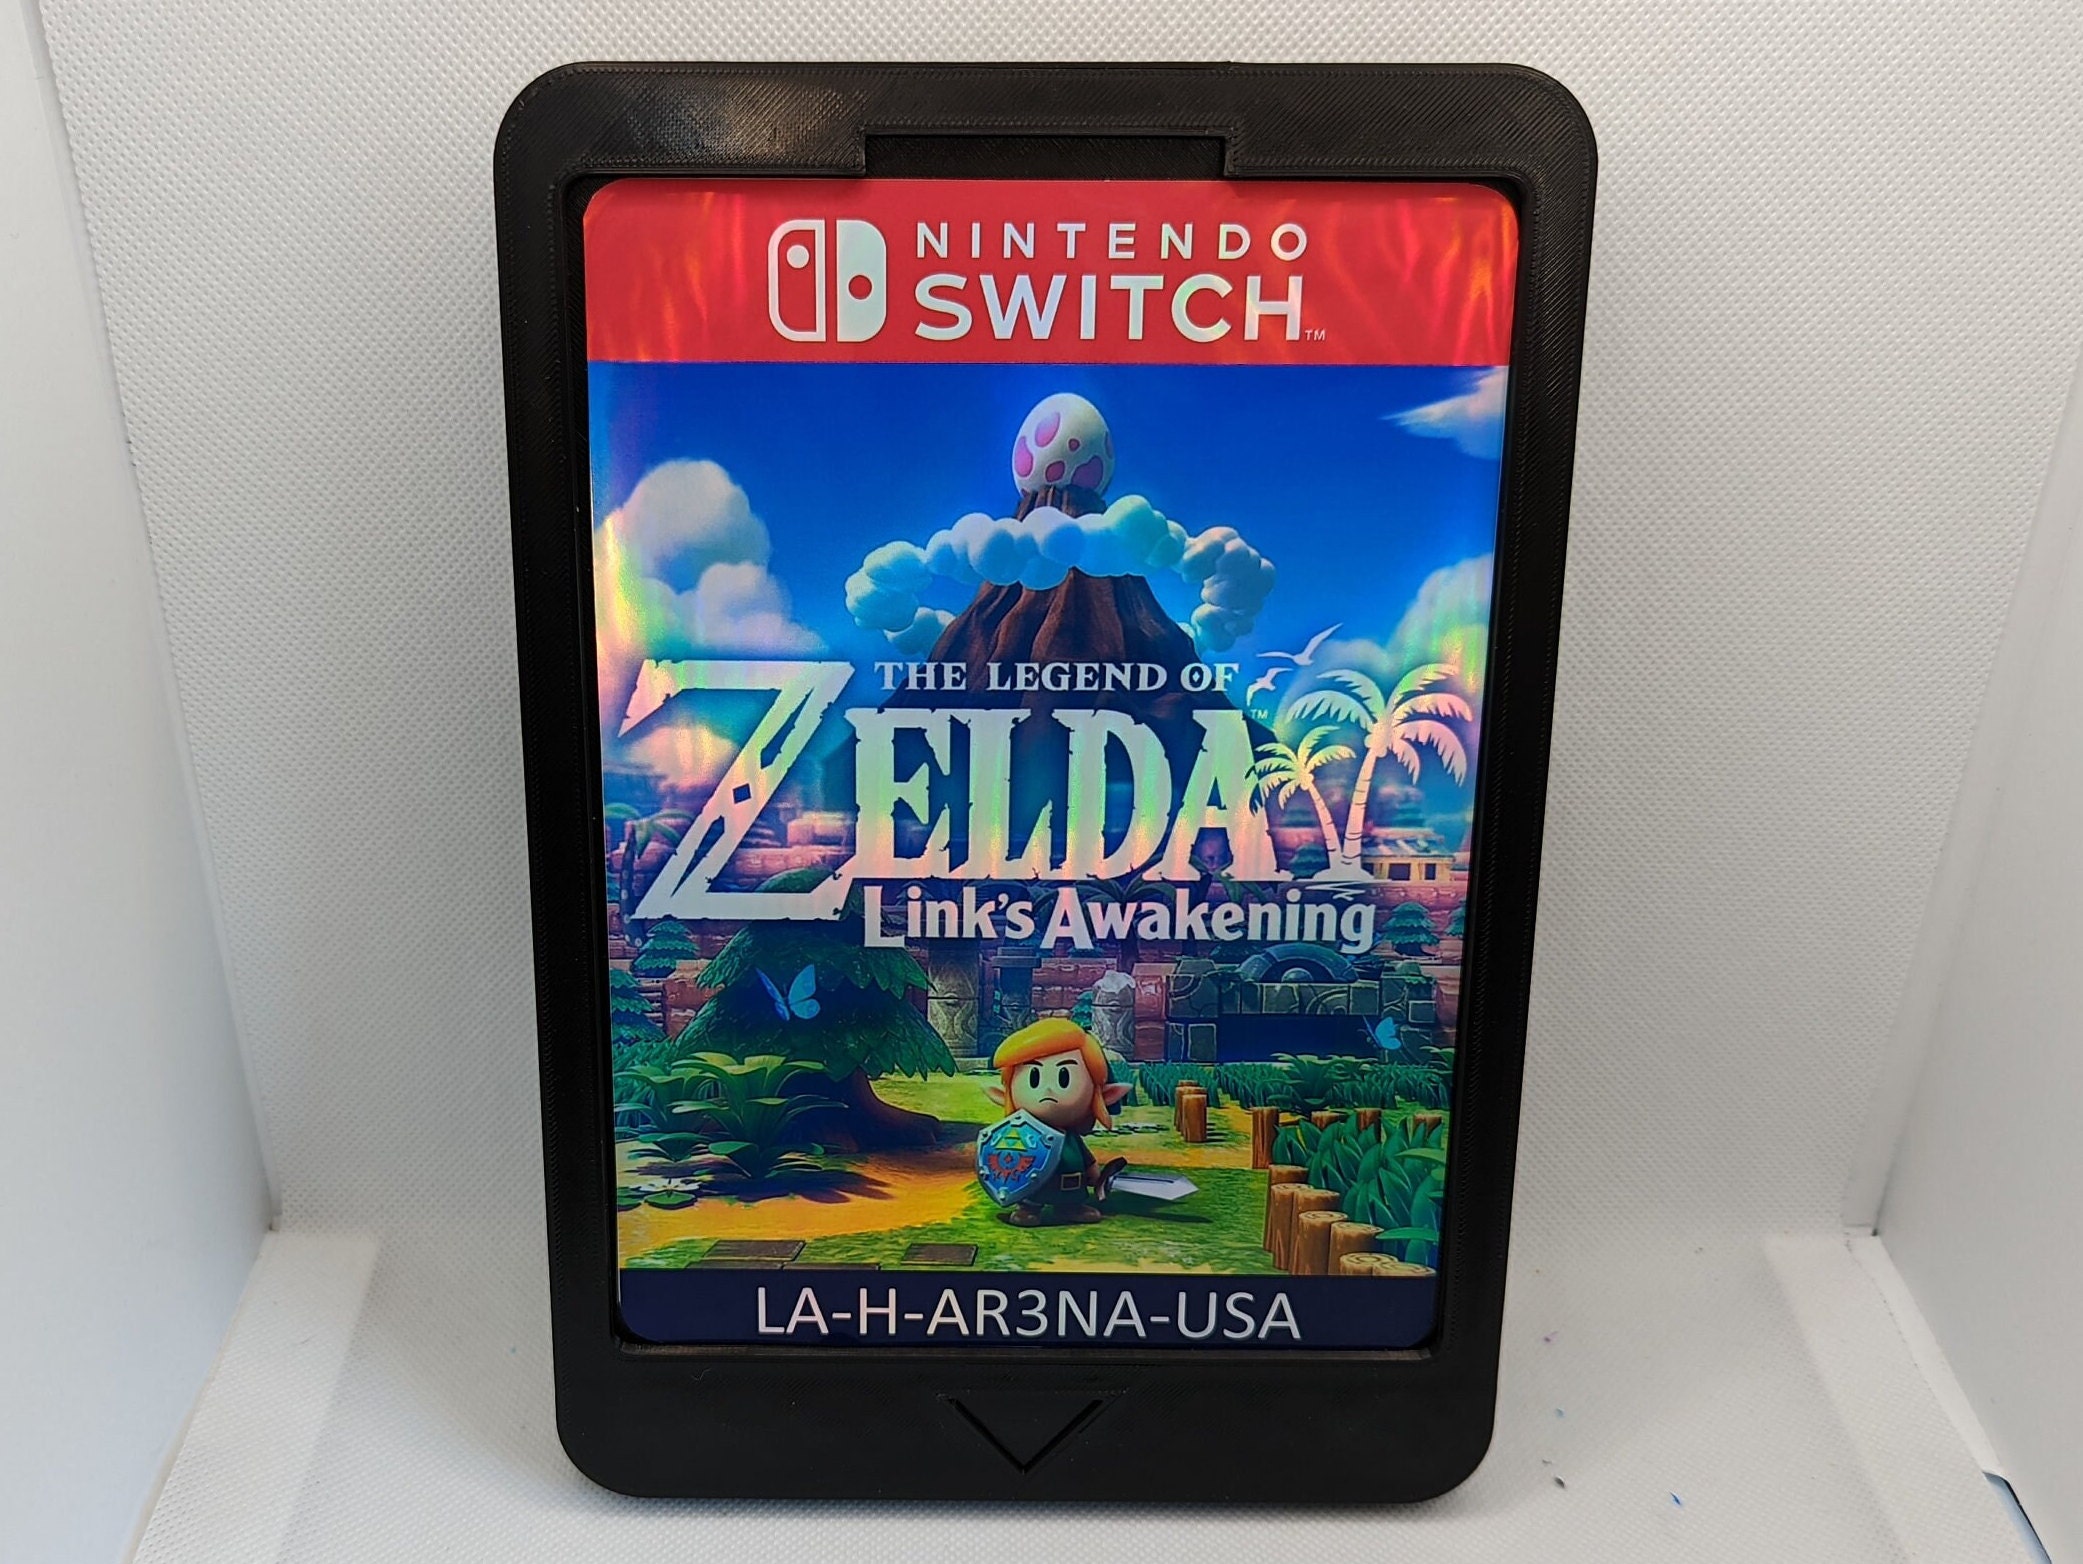 Giant Nintendo Switch Cartridge Decoration Awakening Legend Denmark Zelda: - Link\'s Etsy of